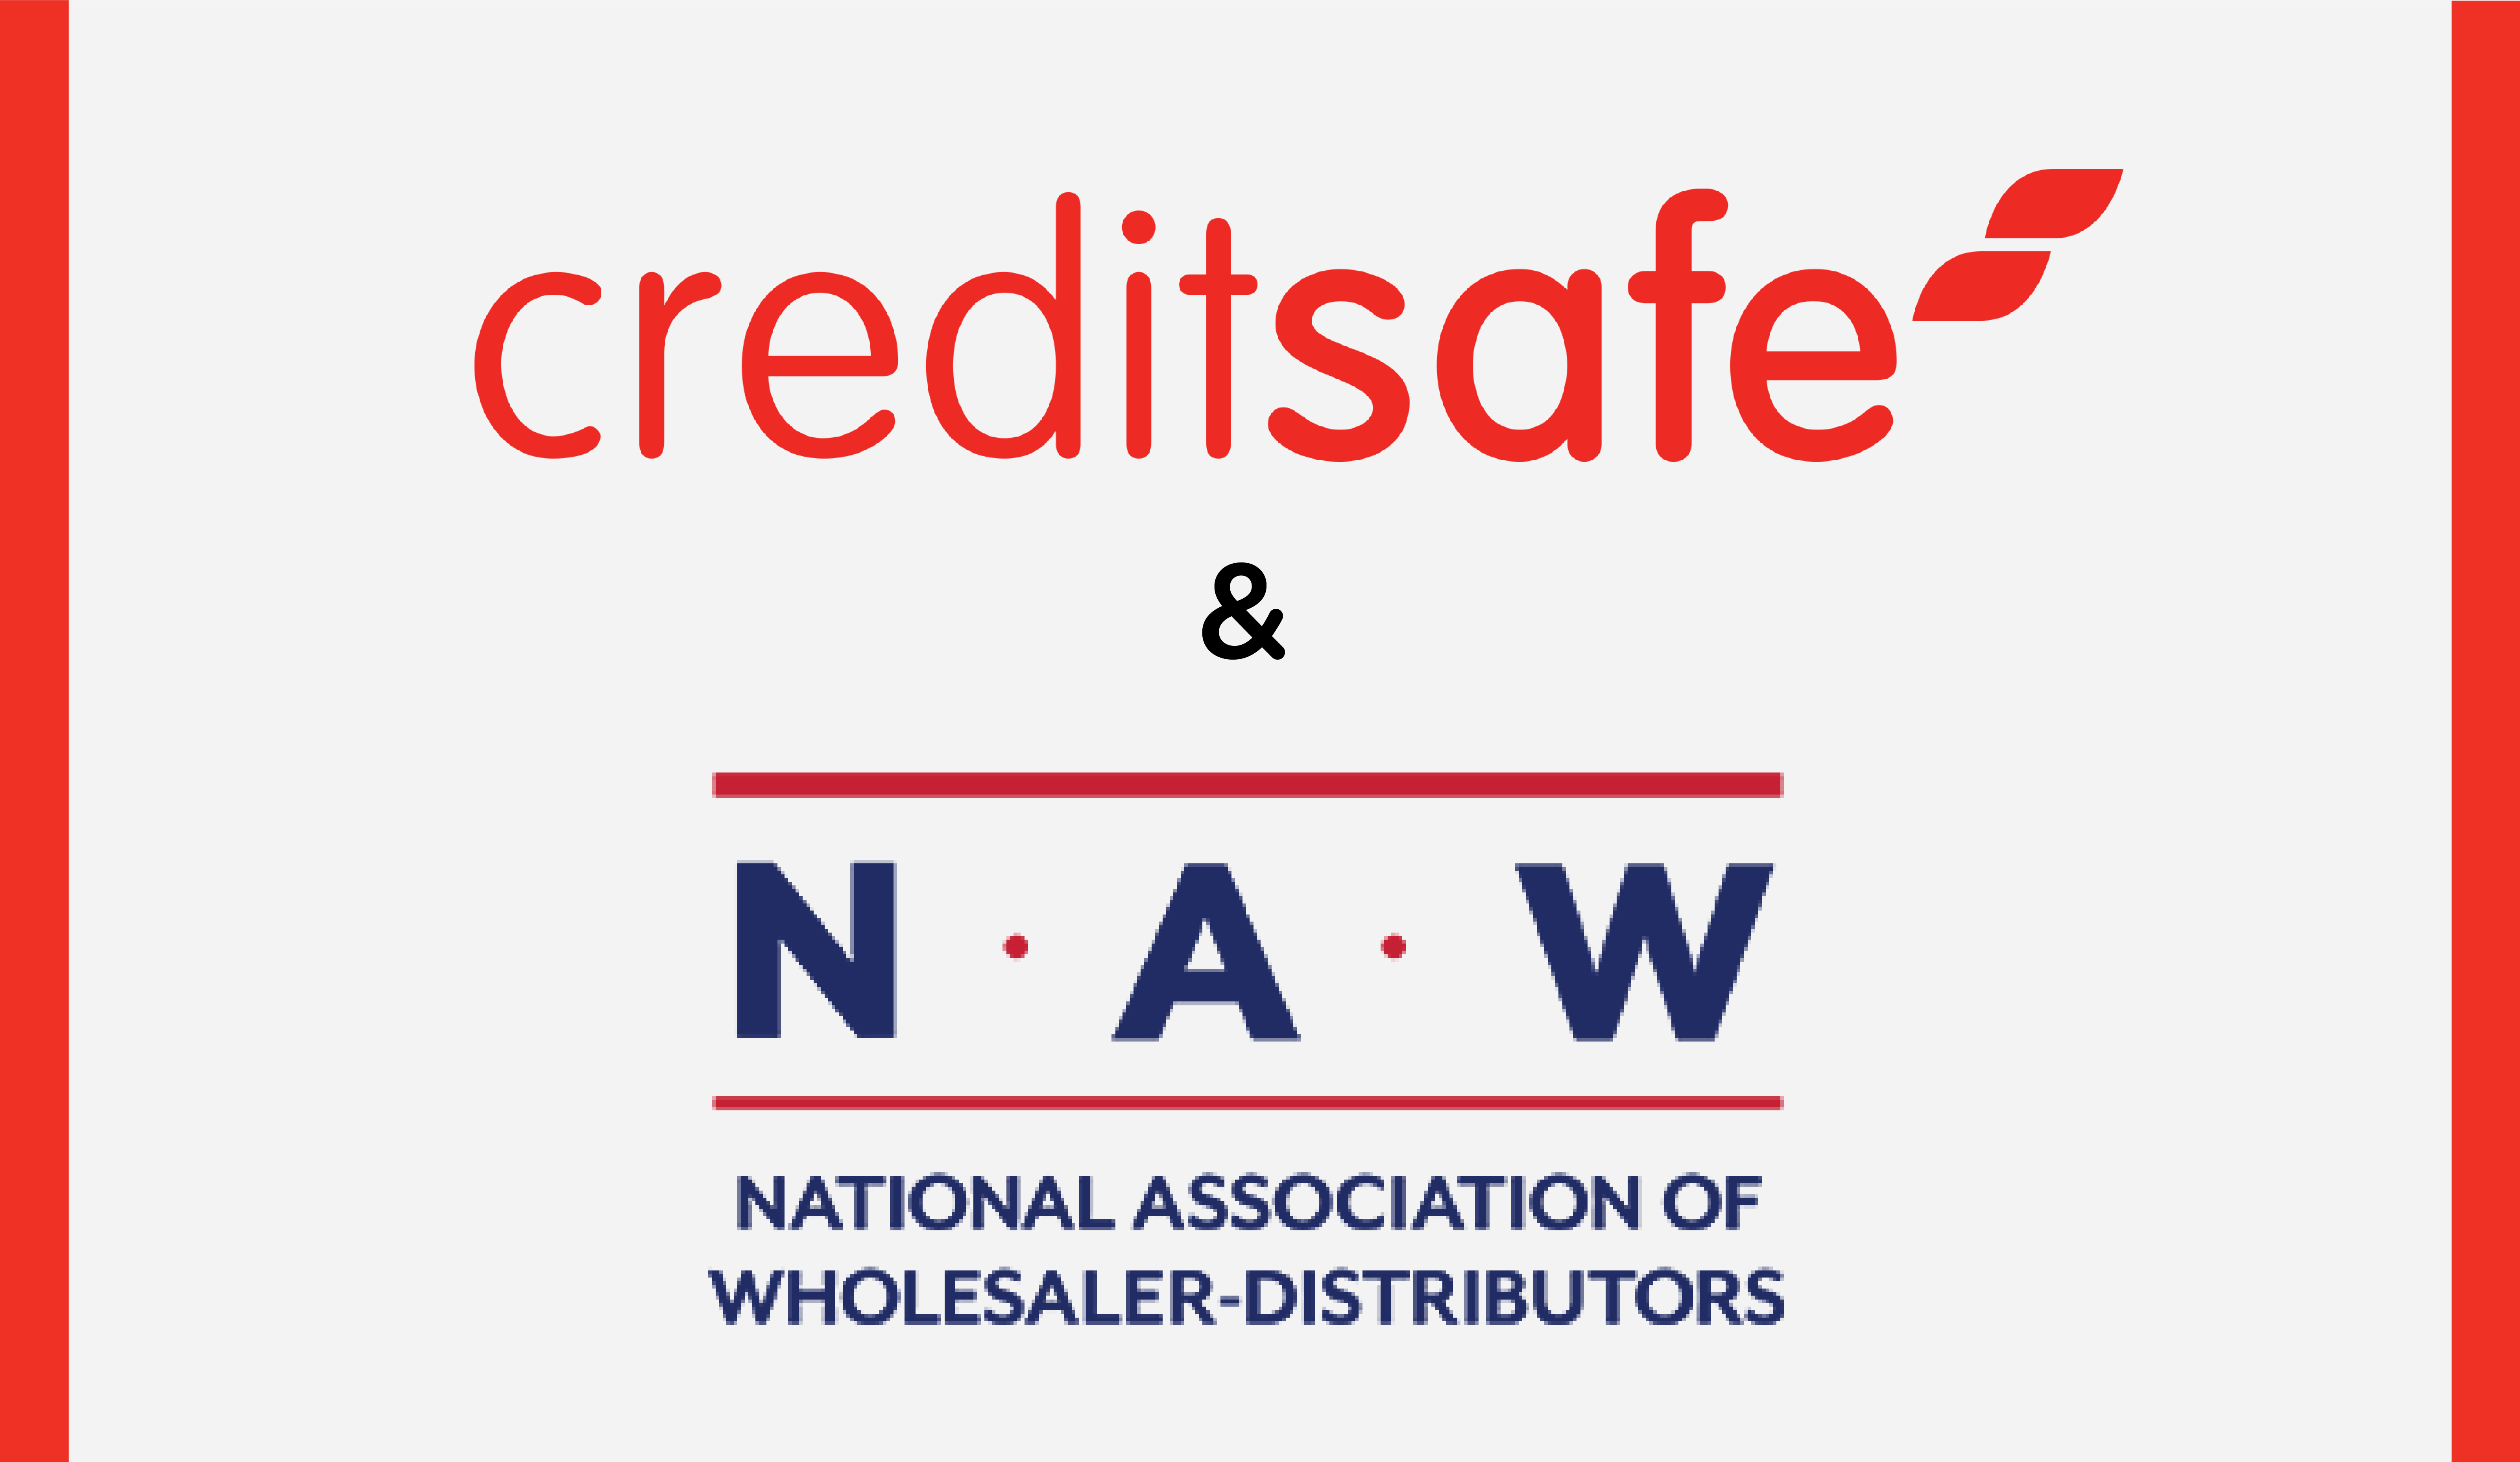 NAW and Creditsafe: A powerful partnership for wholesaler-distributors